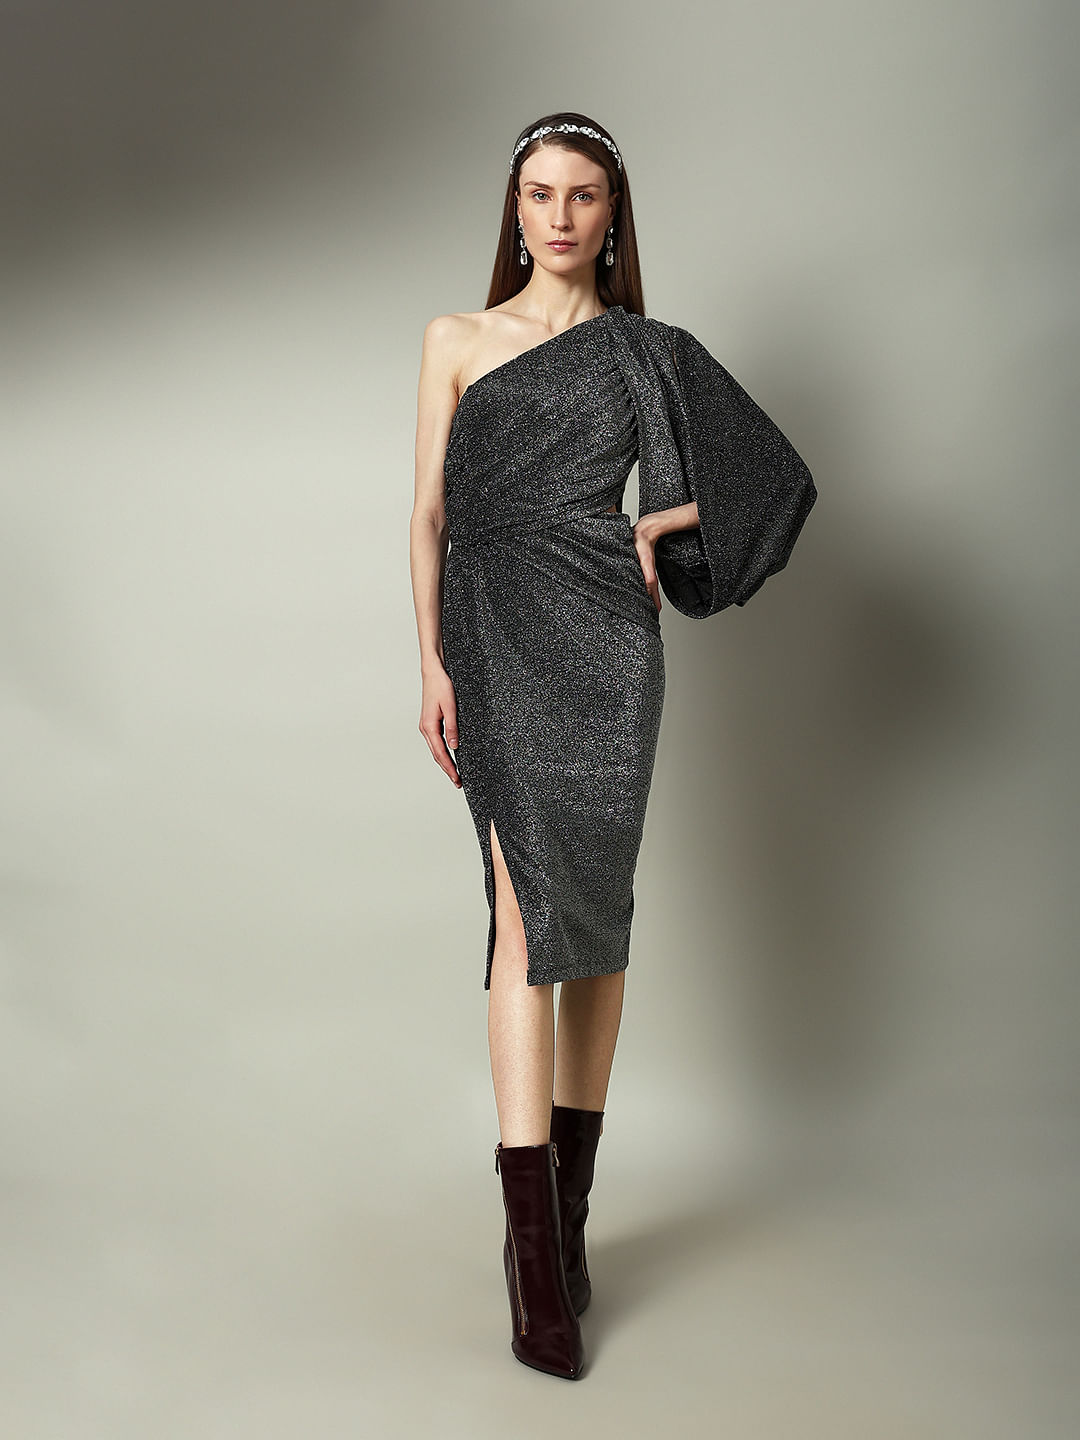 Vero Moda Mathilde Party Dress Size XL | eBay